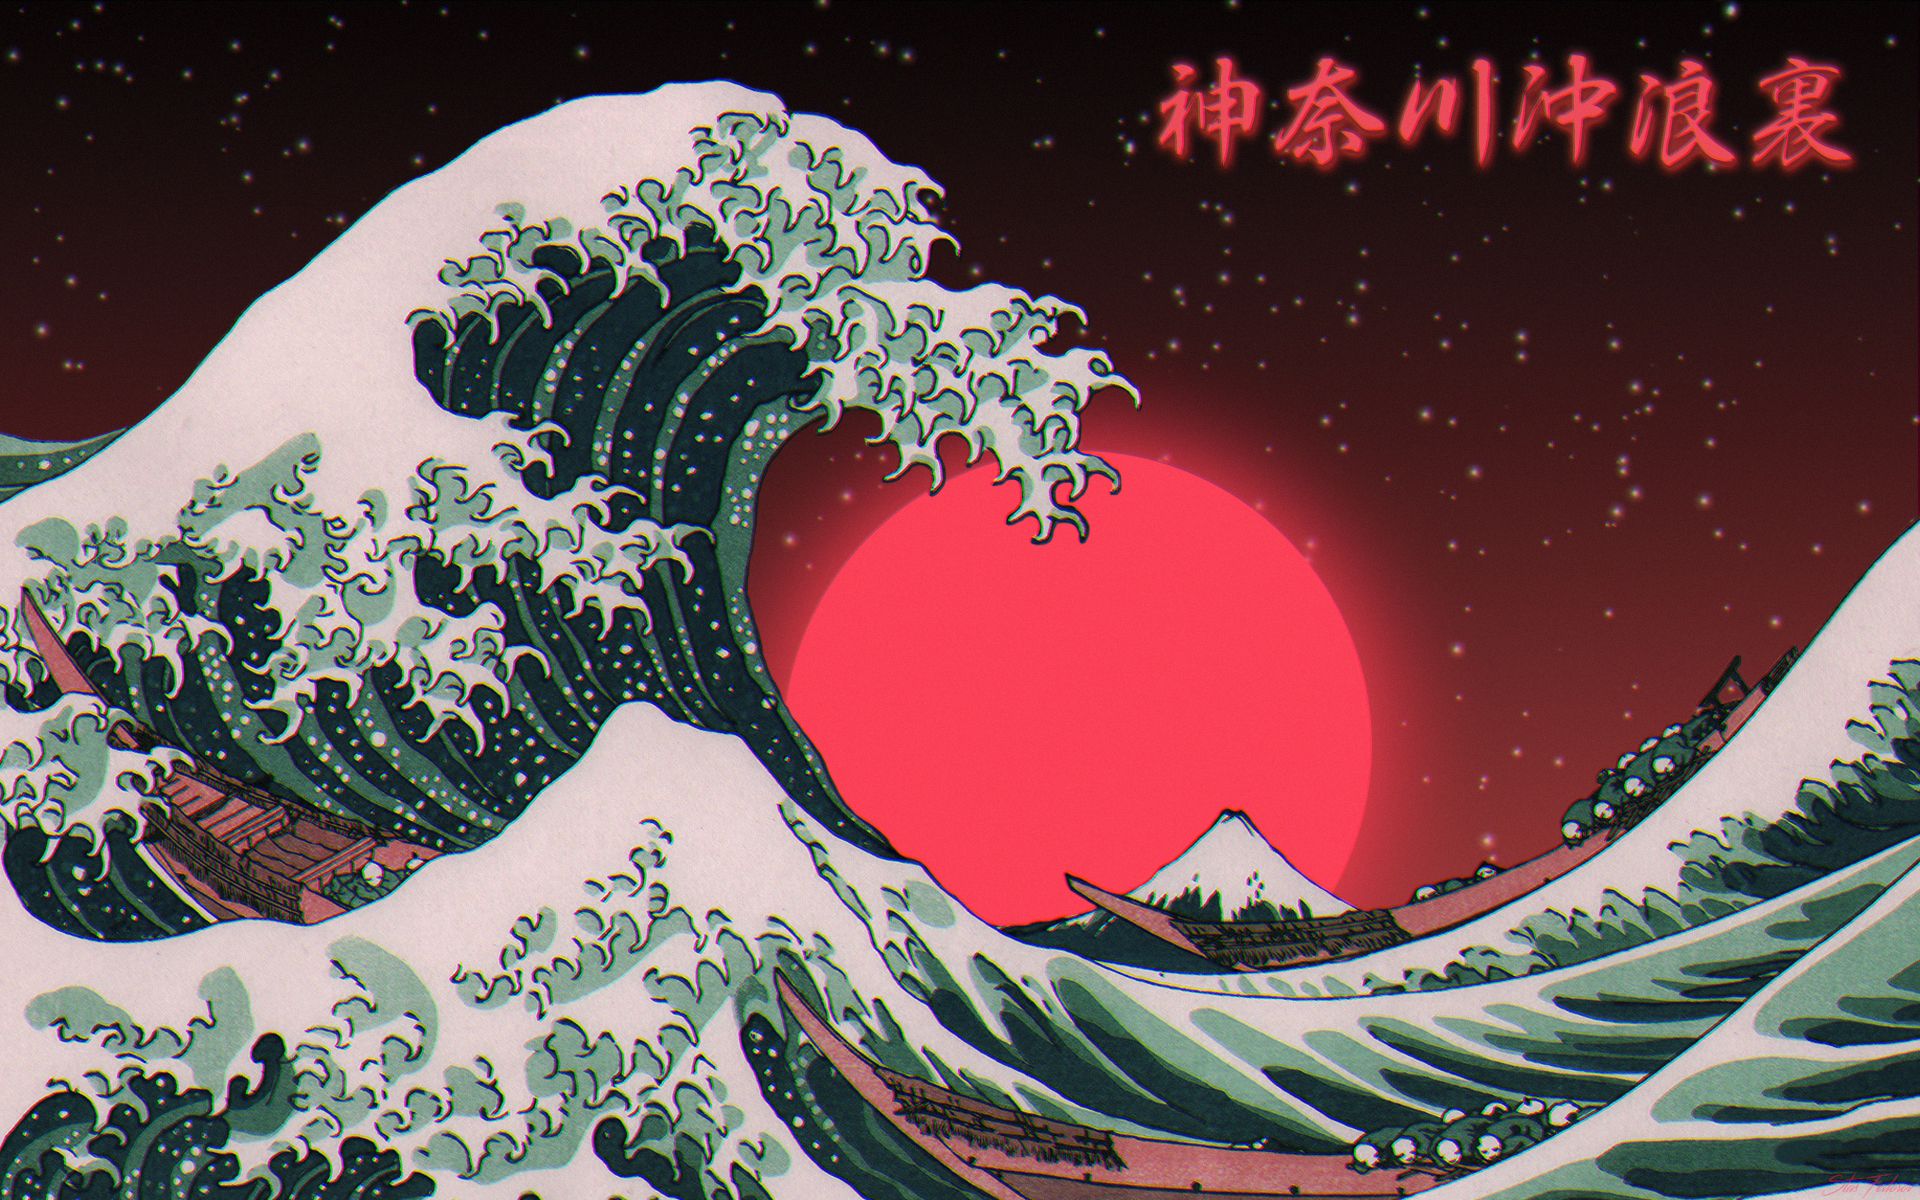 Japan, Digital art, Typography, Sea, Photohop, The Great Wave off